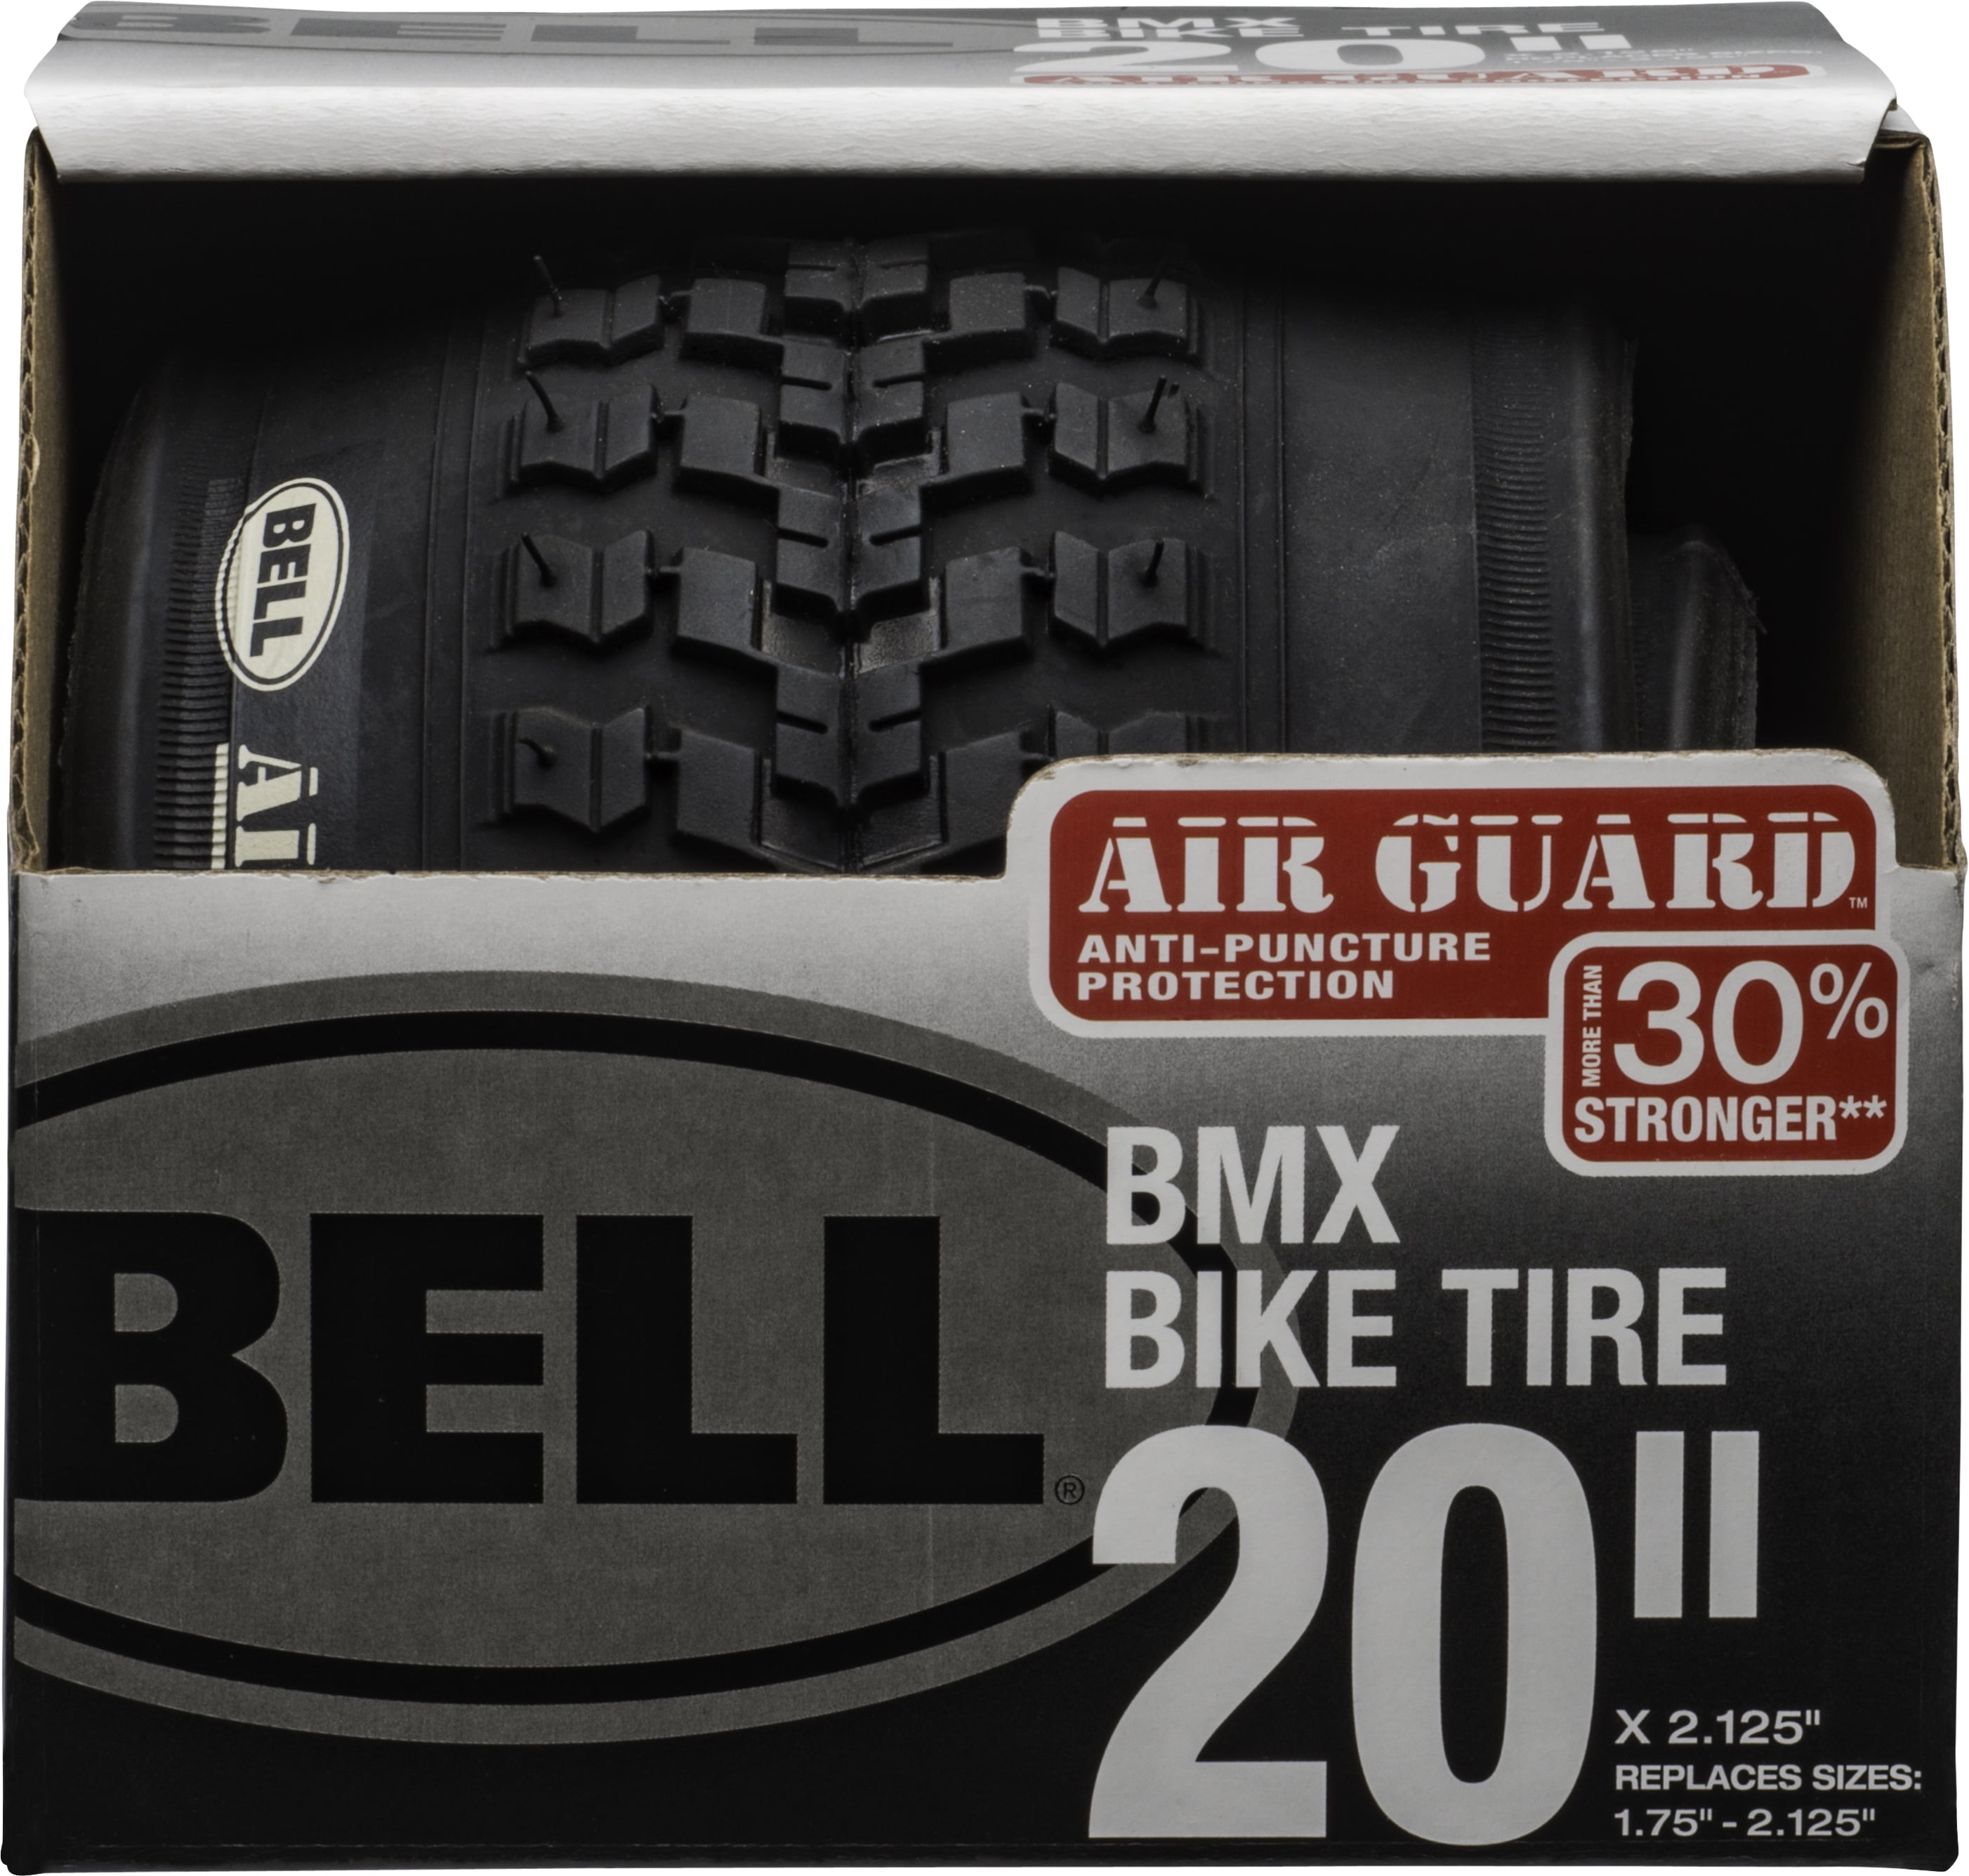 Details about   New Bell Freestyle BMX Bike Tire 20 x 1.75 x 2.25 w/ Dupont Kevlar NIB 20" 